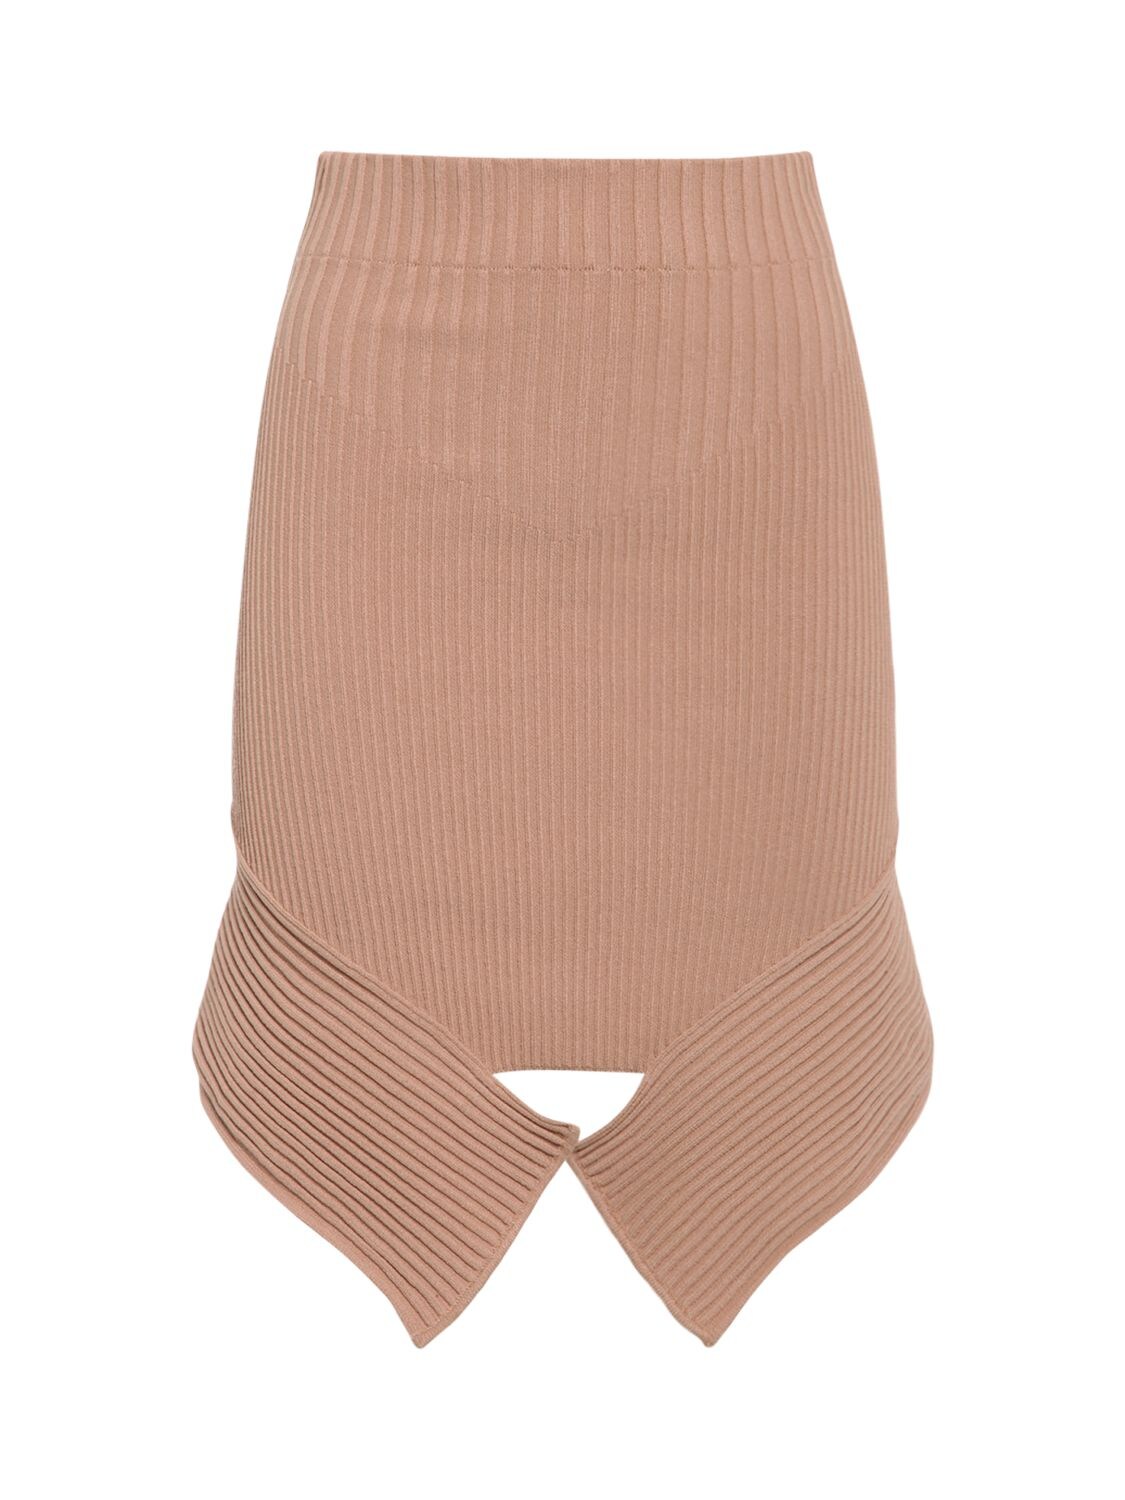 ANDREADAMO Asymmetric Viscose Blend Knit Midi Skirt